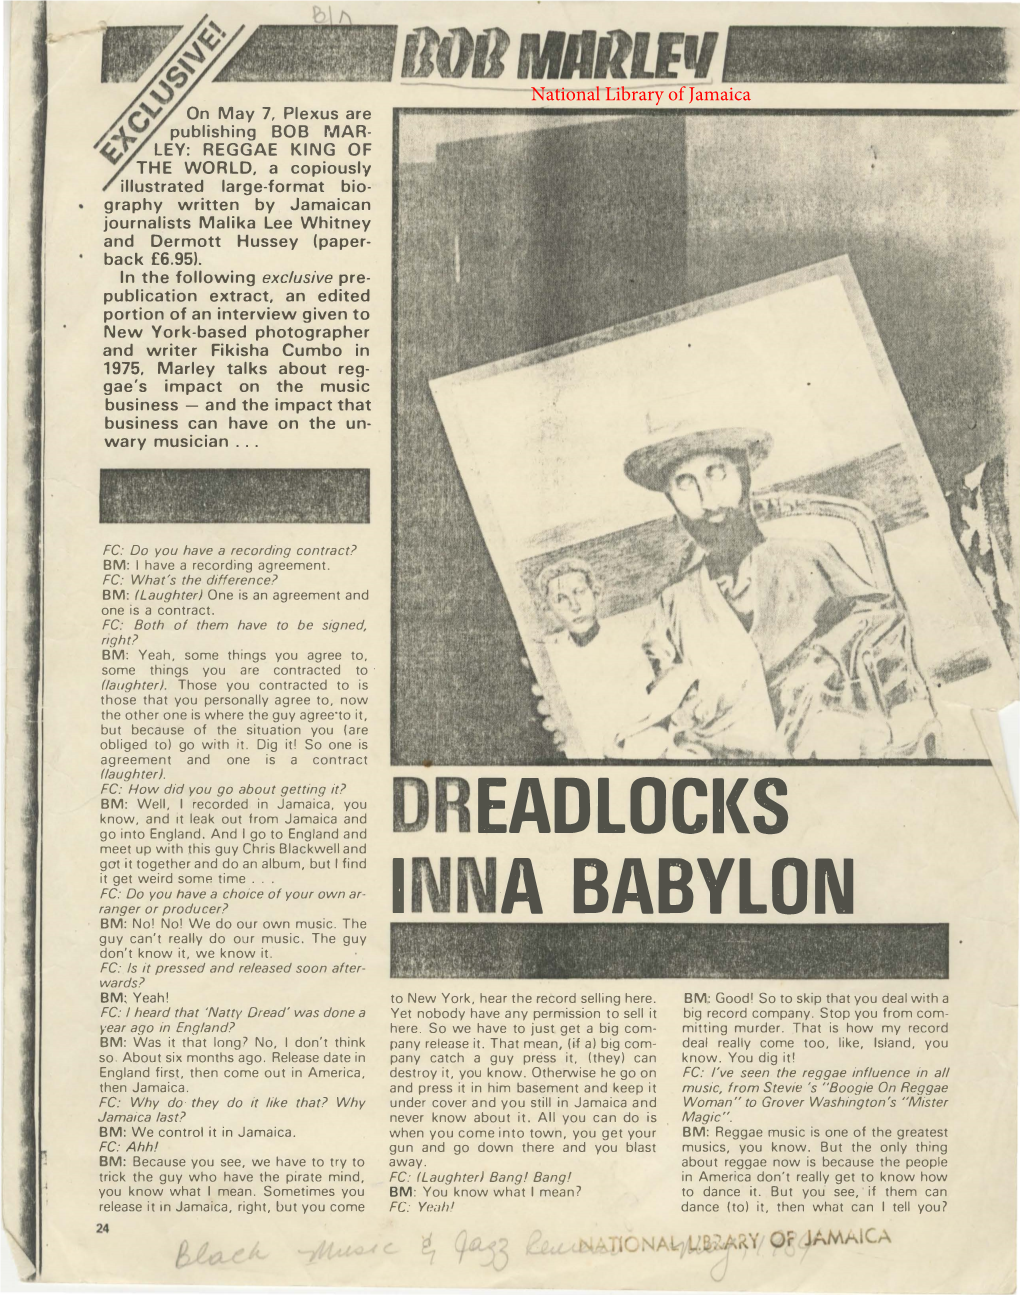 Bob Marley: Dreadlocks Inna Babylon